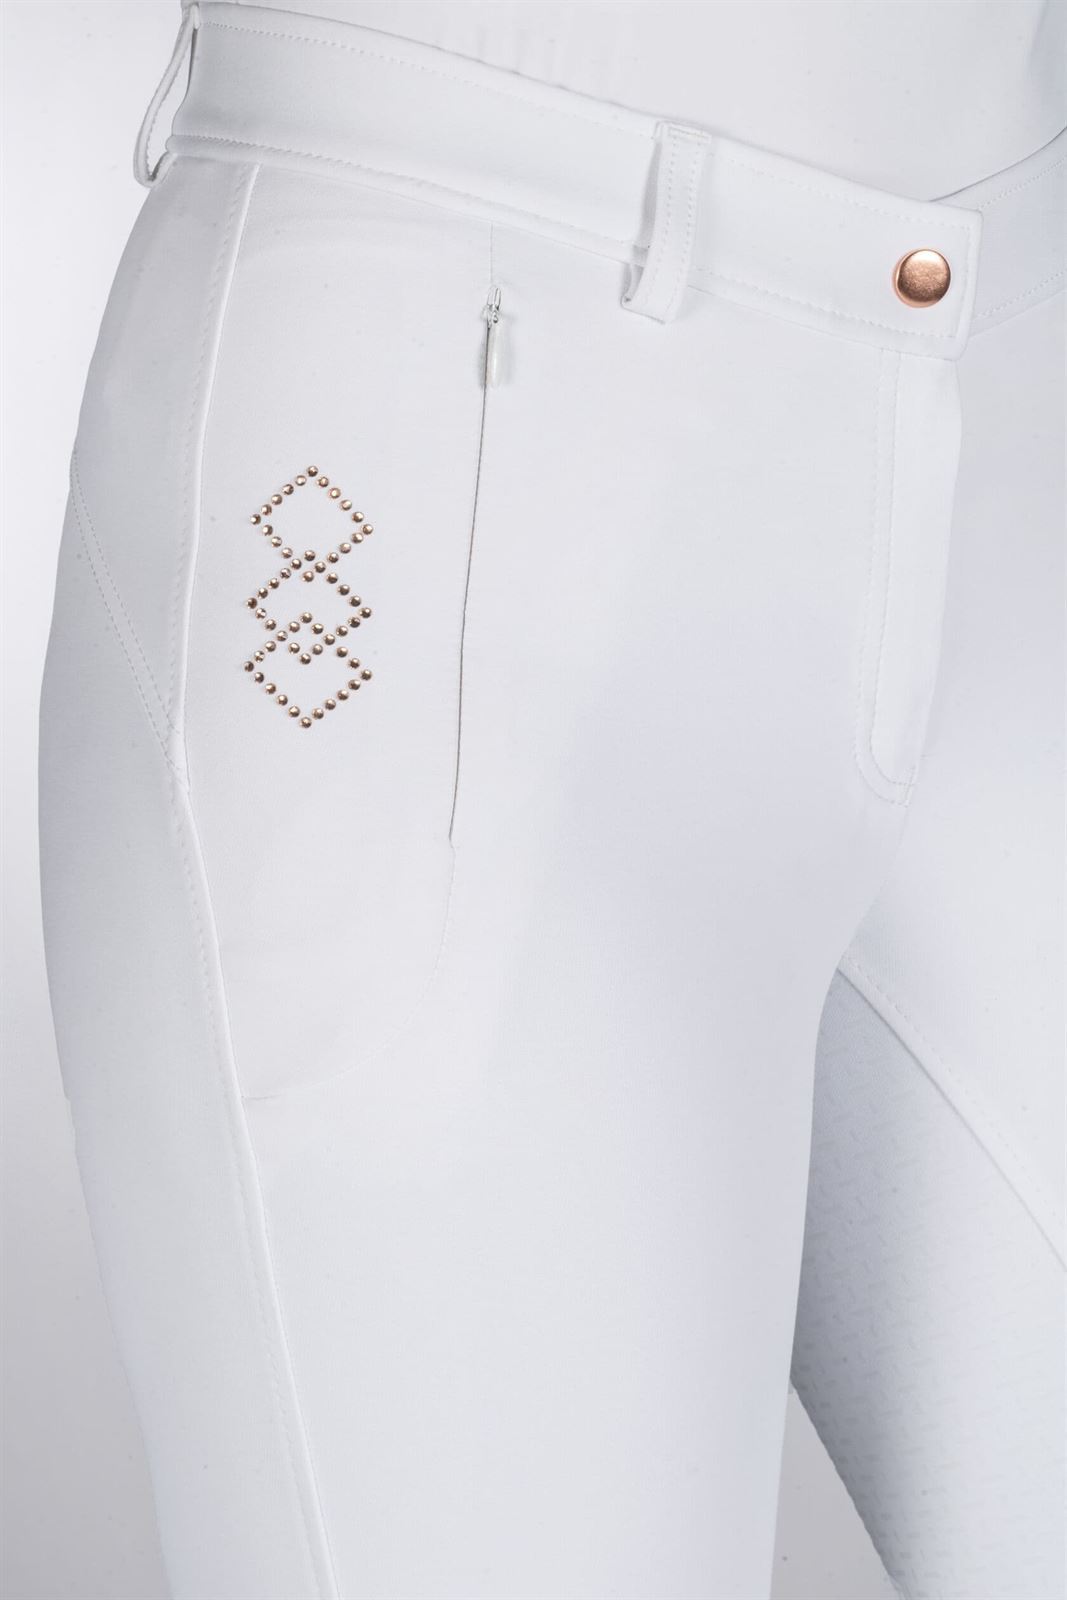 Pantalón mujer HKM Sports Equipment Alexis culera de grip, color blanco - Imagen 4